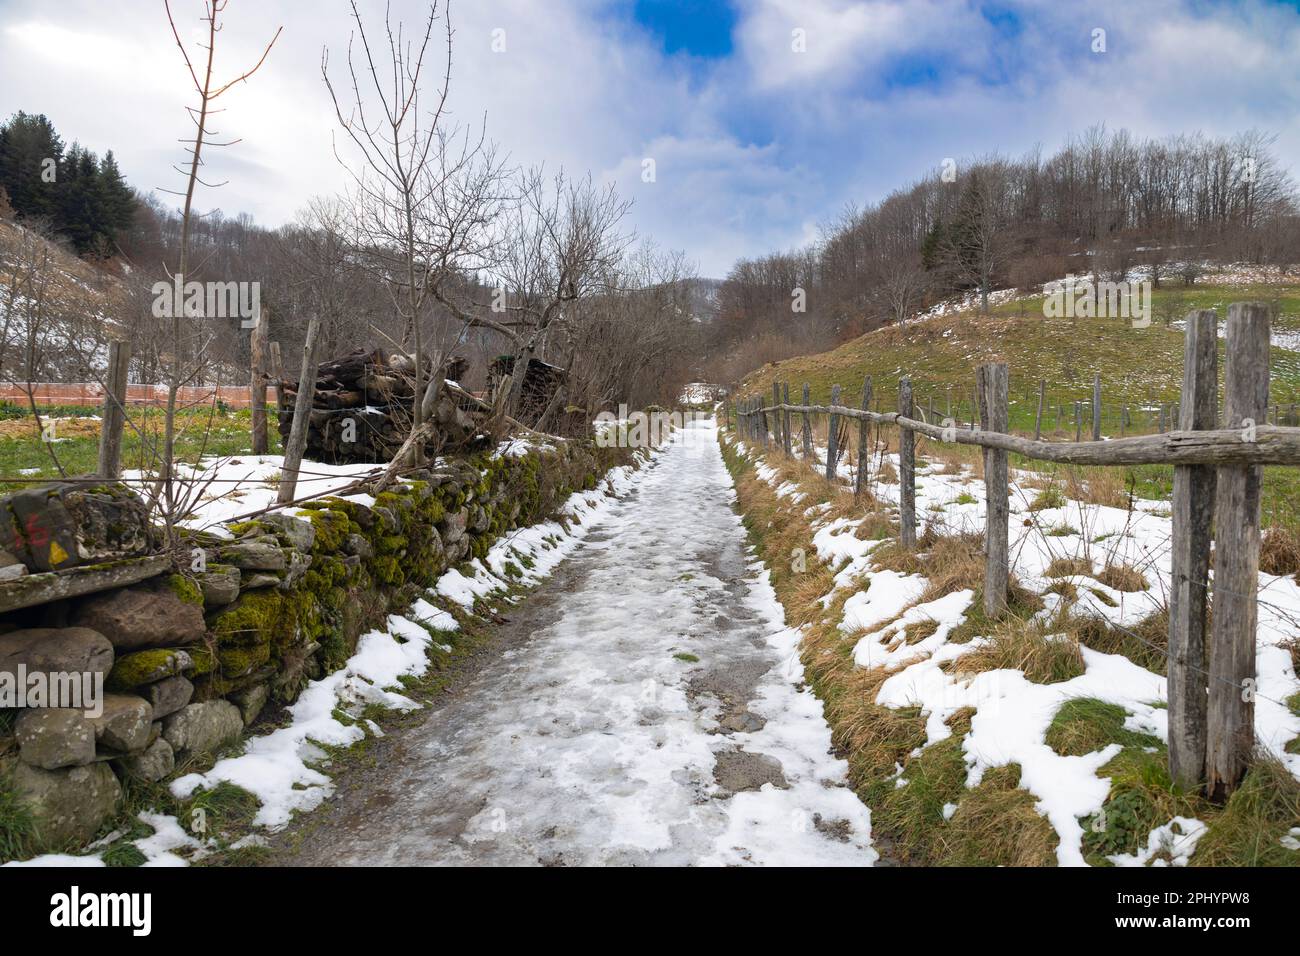 Frozen country path near the municipality of Ventarola, province of Genoa, Italy Stock Photo